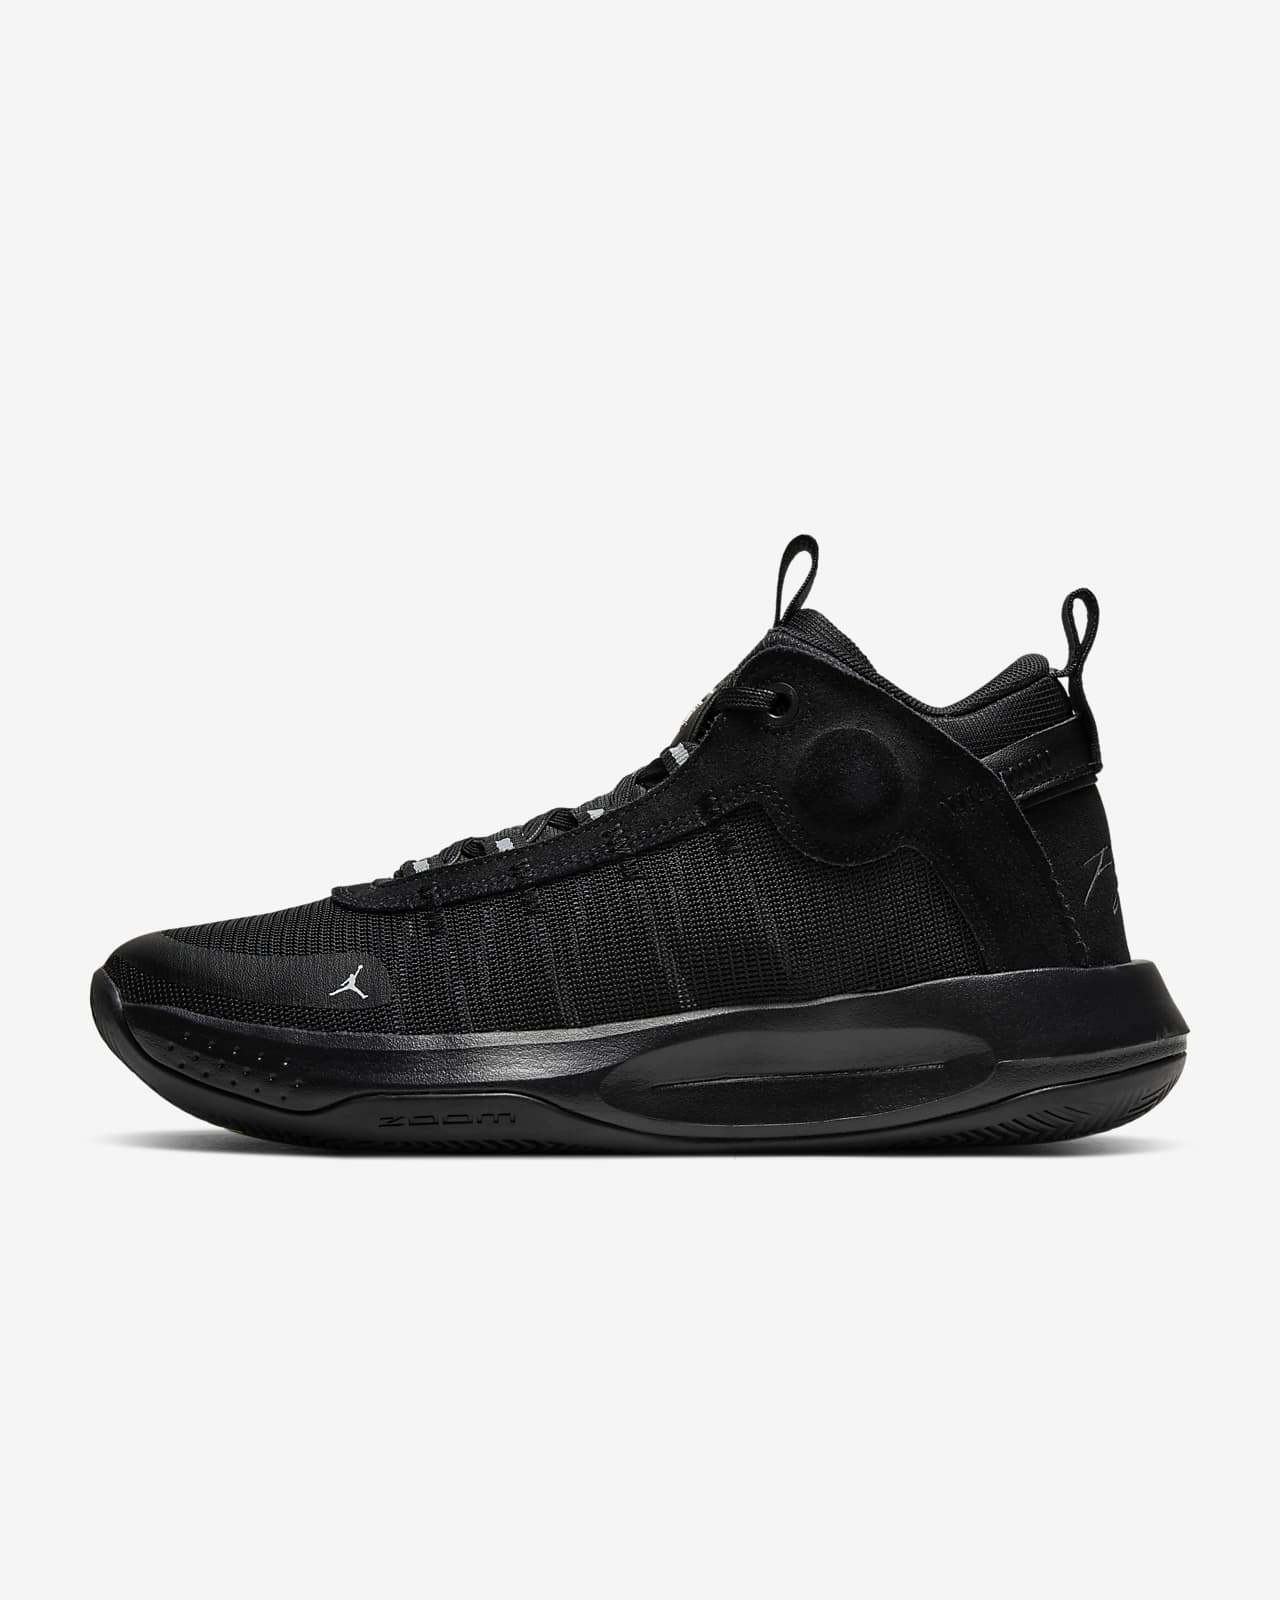 black basketball shoes jordans